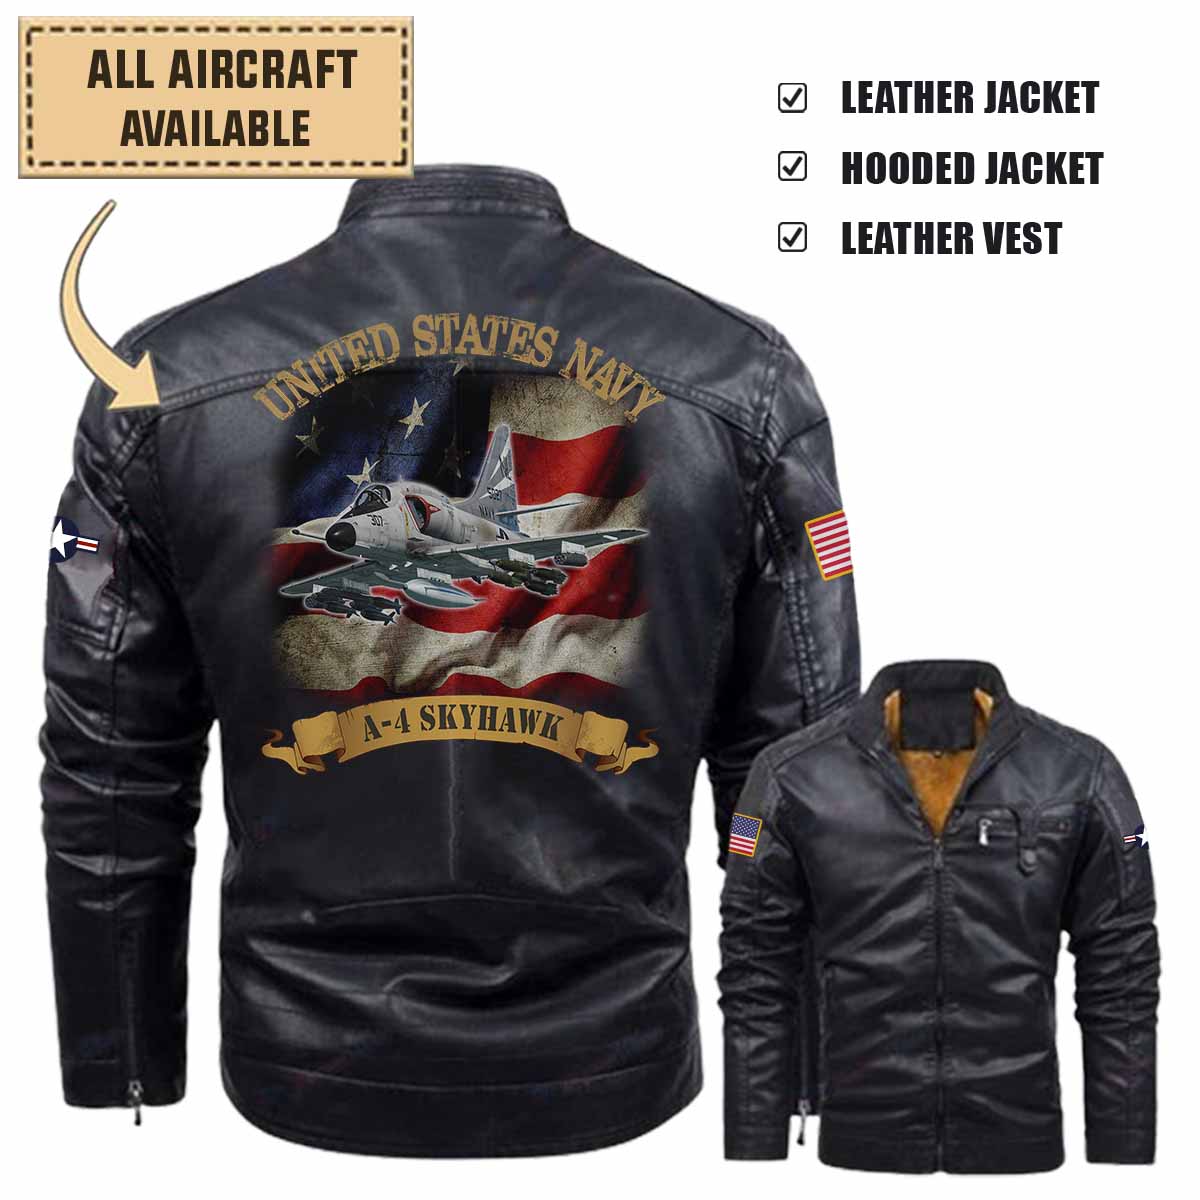 a 4 skyhawk a4 navyaircraft leather jacket and vest g8a7r